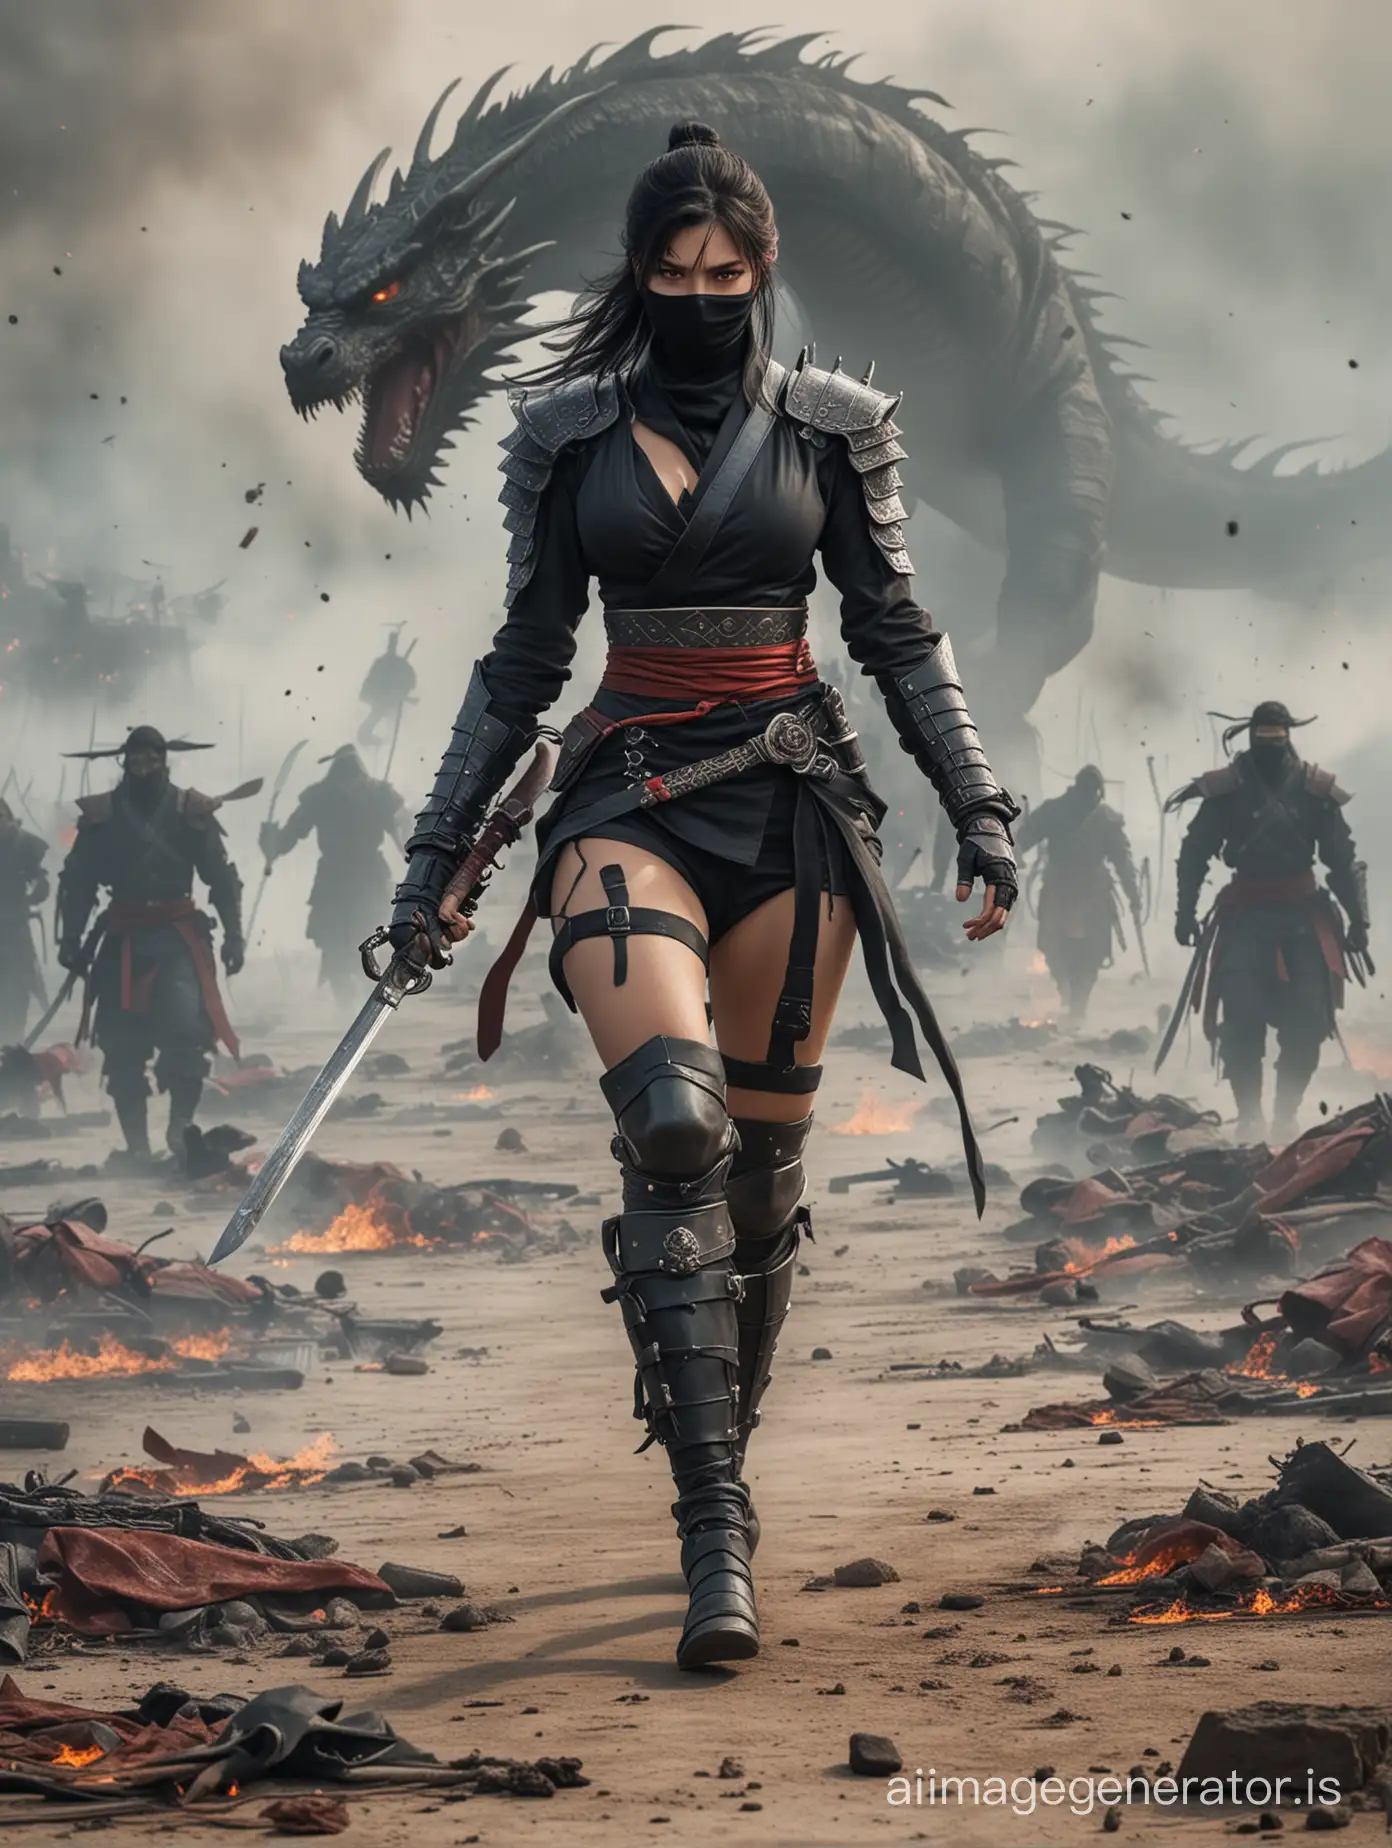 Victorious-Female-Ninja-Walking-on-Battlefield-Amidst-Smoke-and-Dragons-Watch